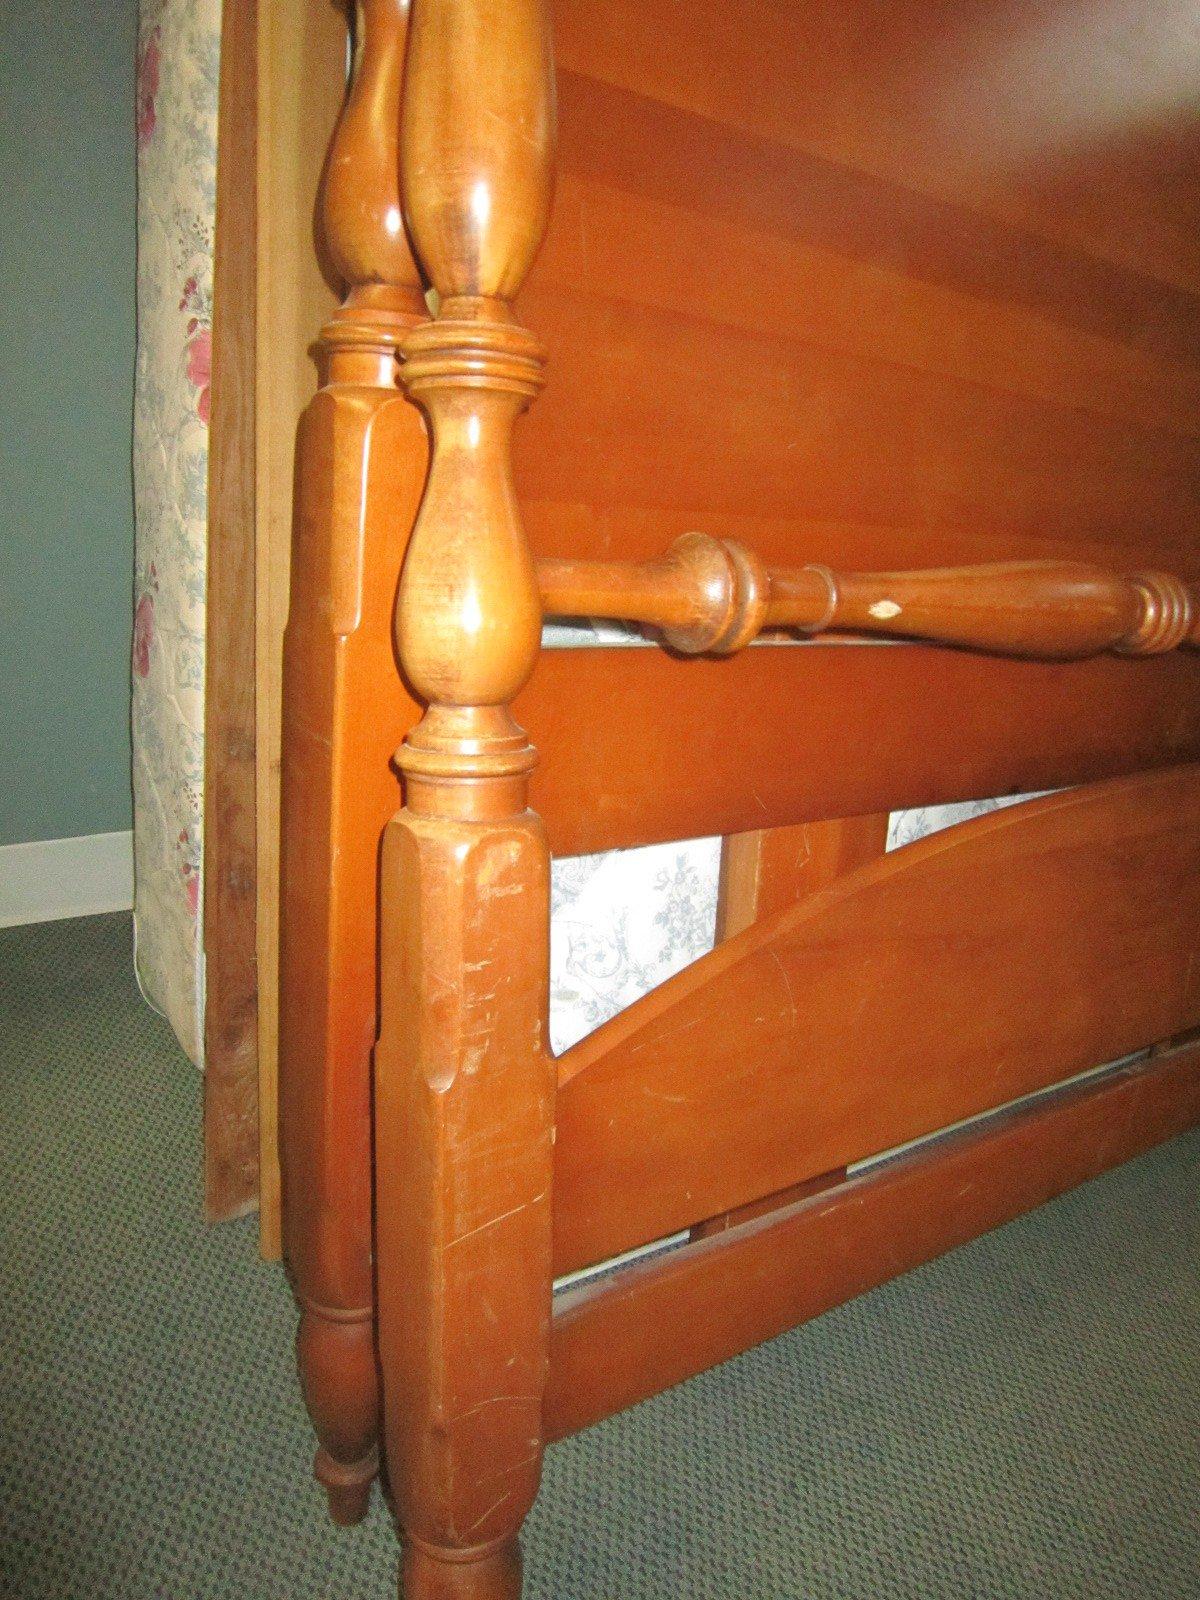 Maple Wood Bed Head/Foot Board w/ Rails